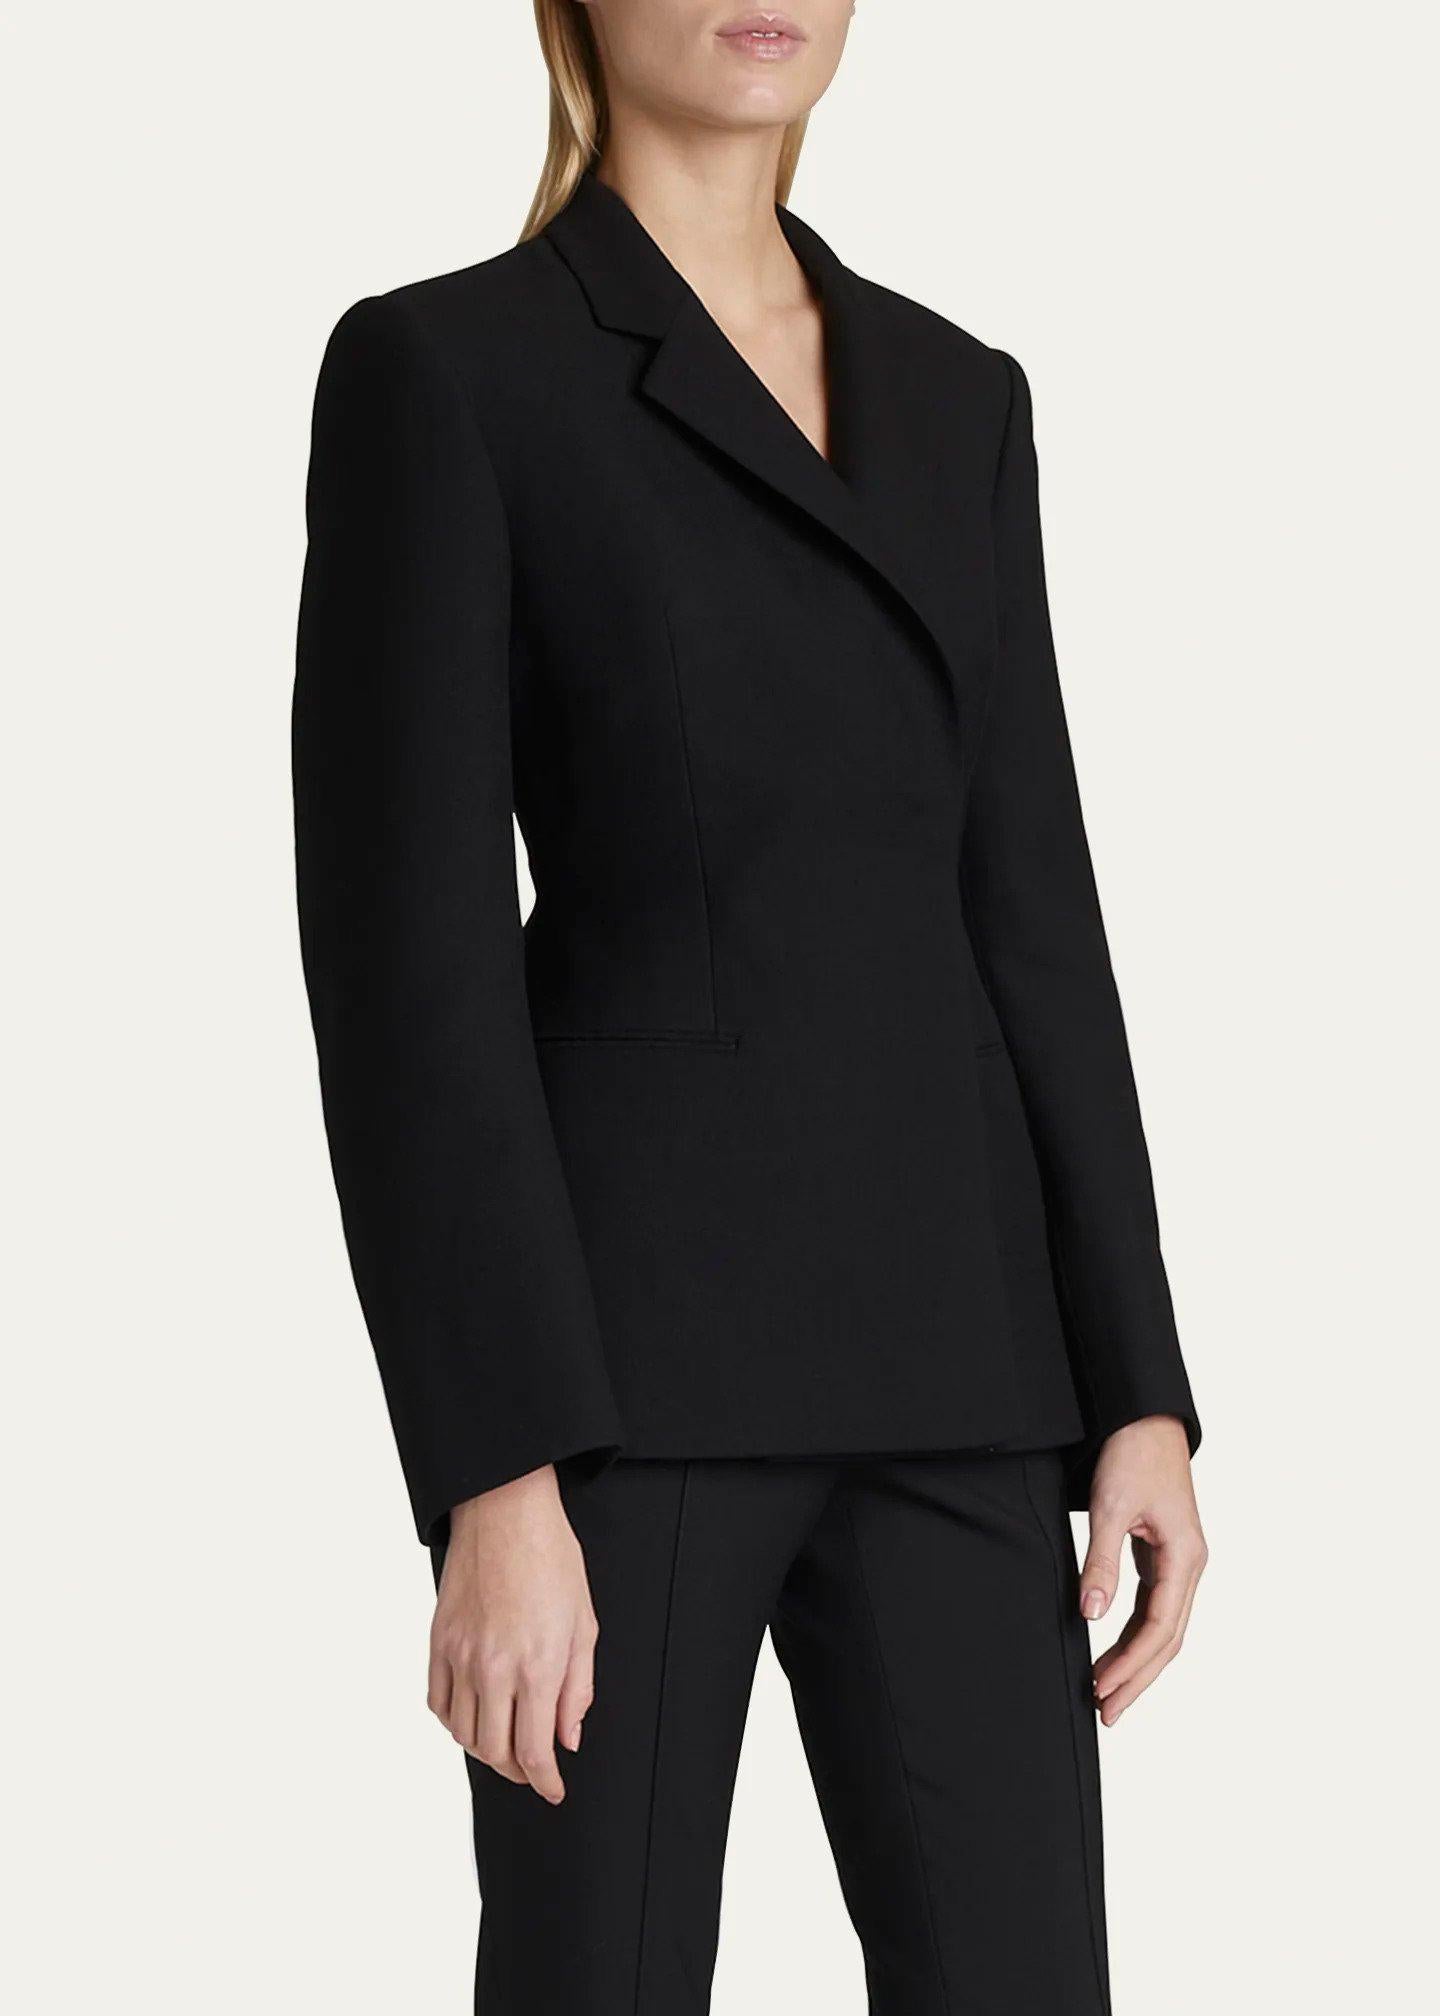 ALAIA black wool gaberdine A TAILORED Blazer Jacket 42 L For Sale 5